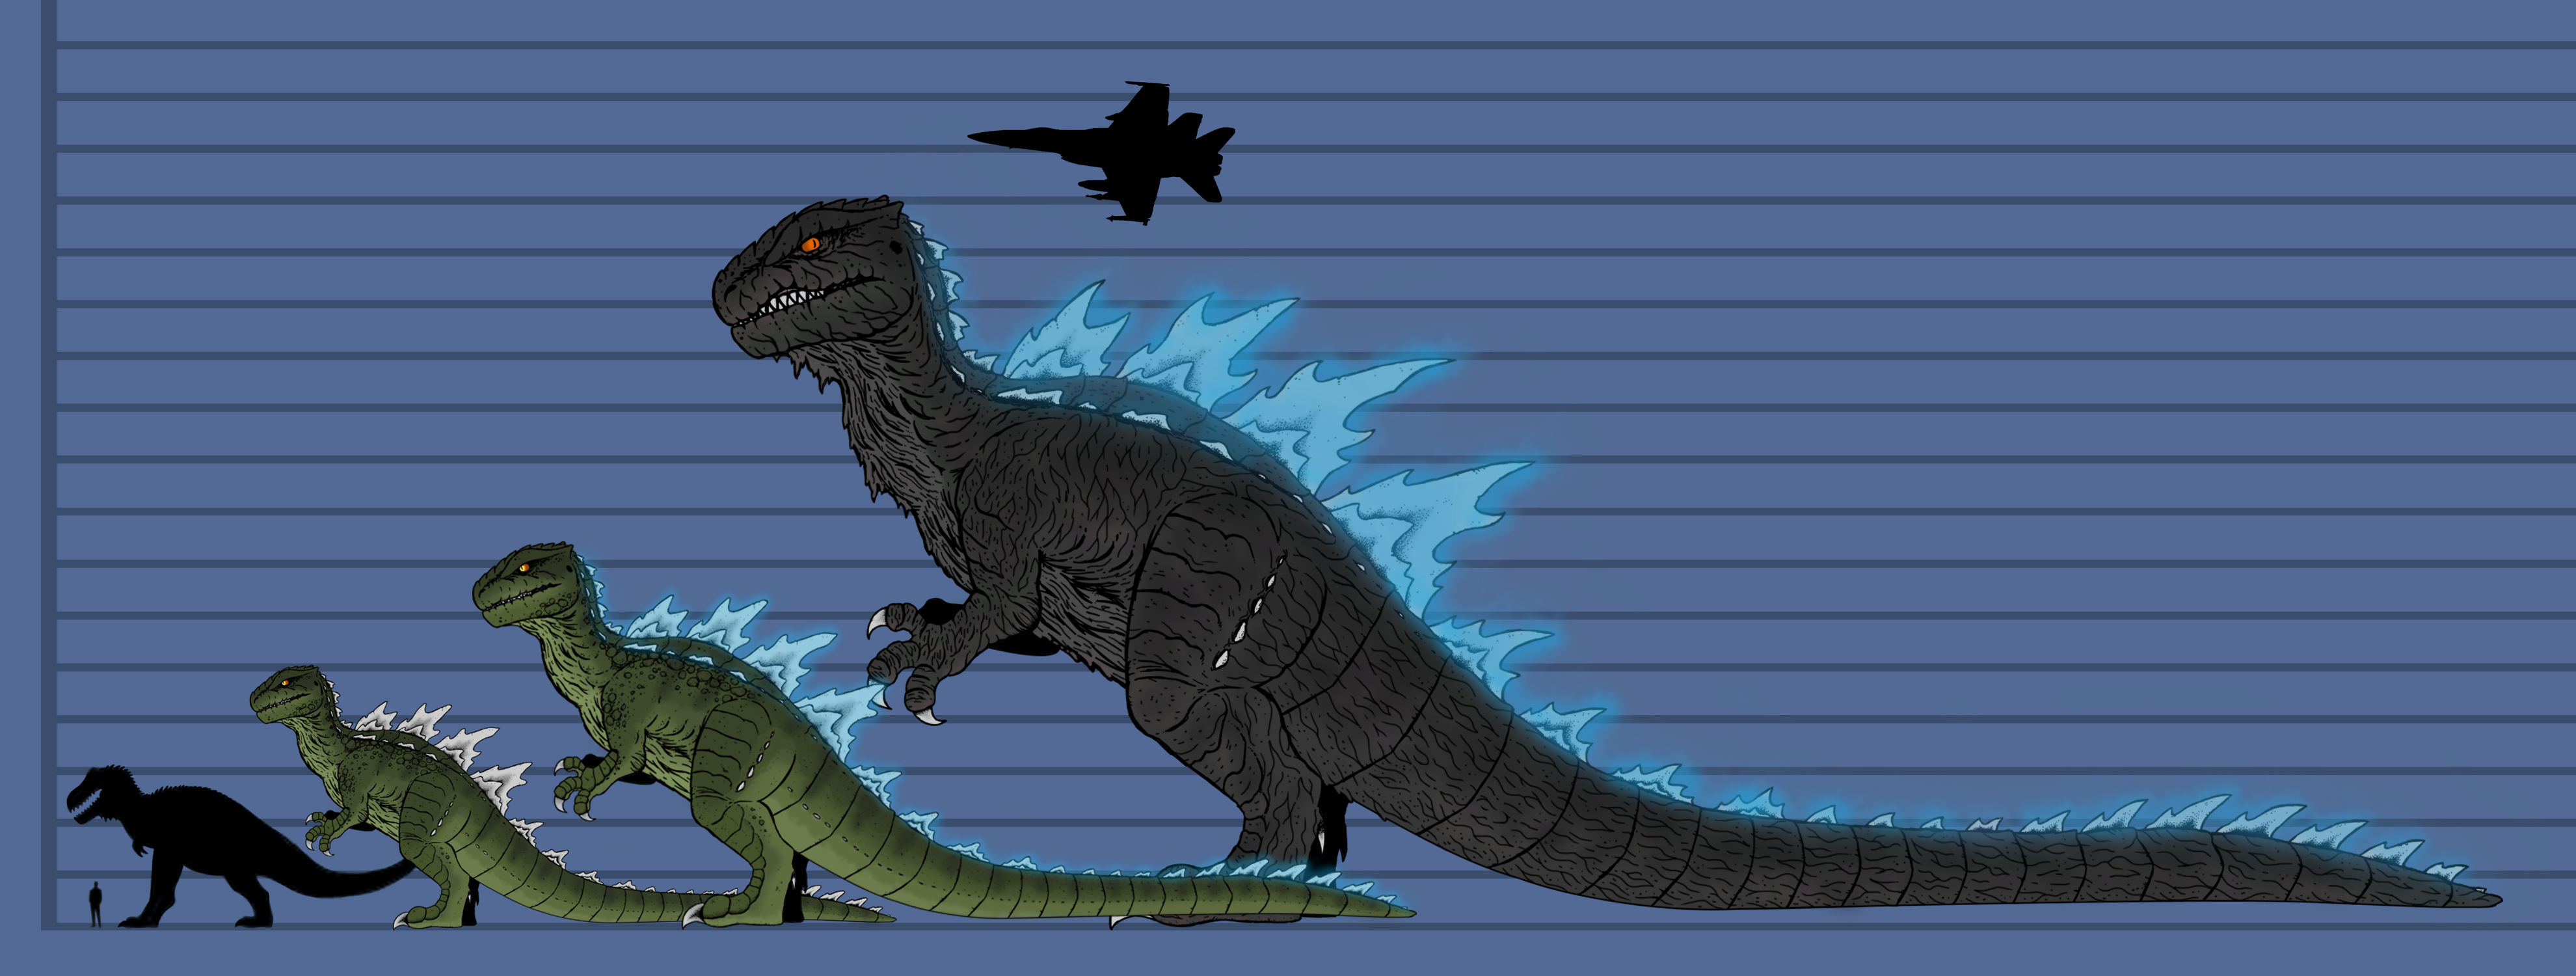 G1: Godzilla by DinoHunter2 on DeviantArt